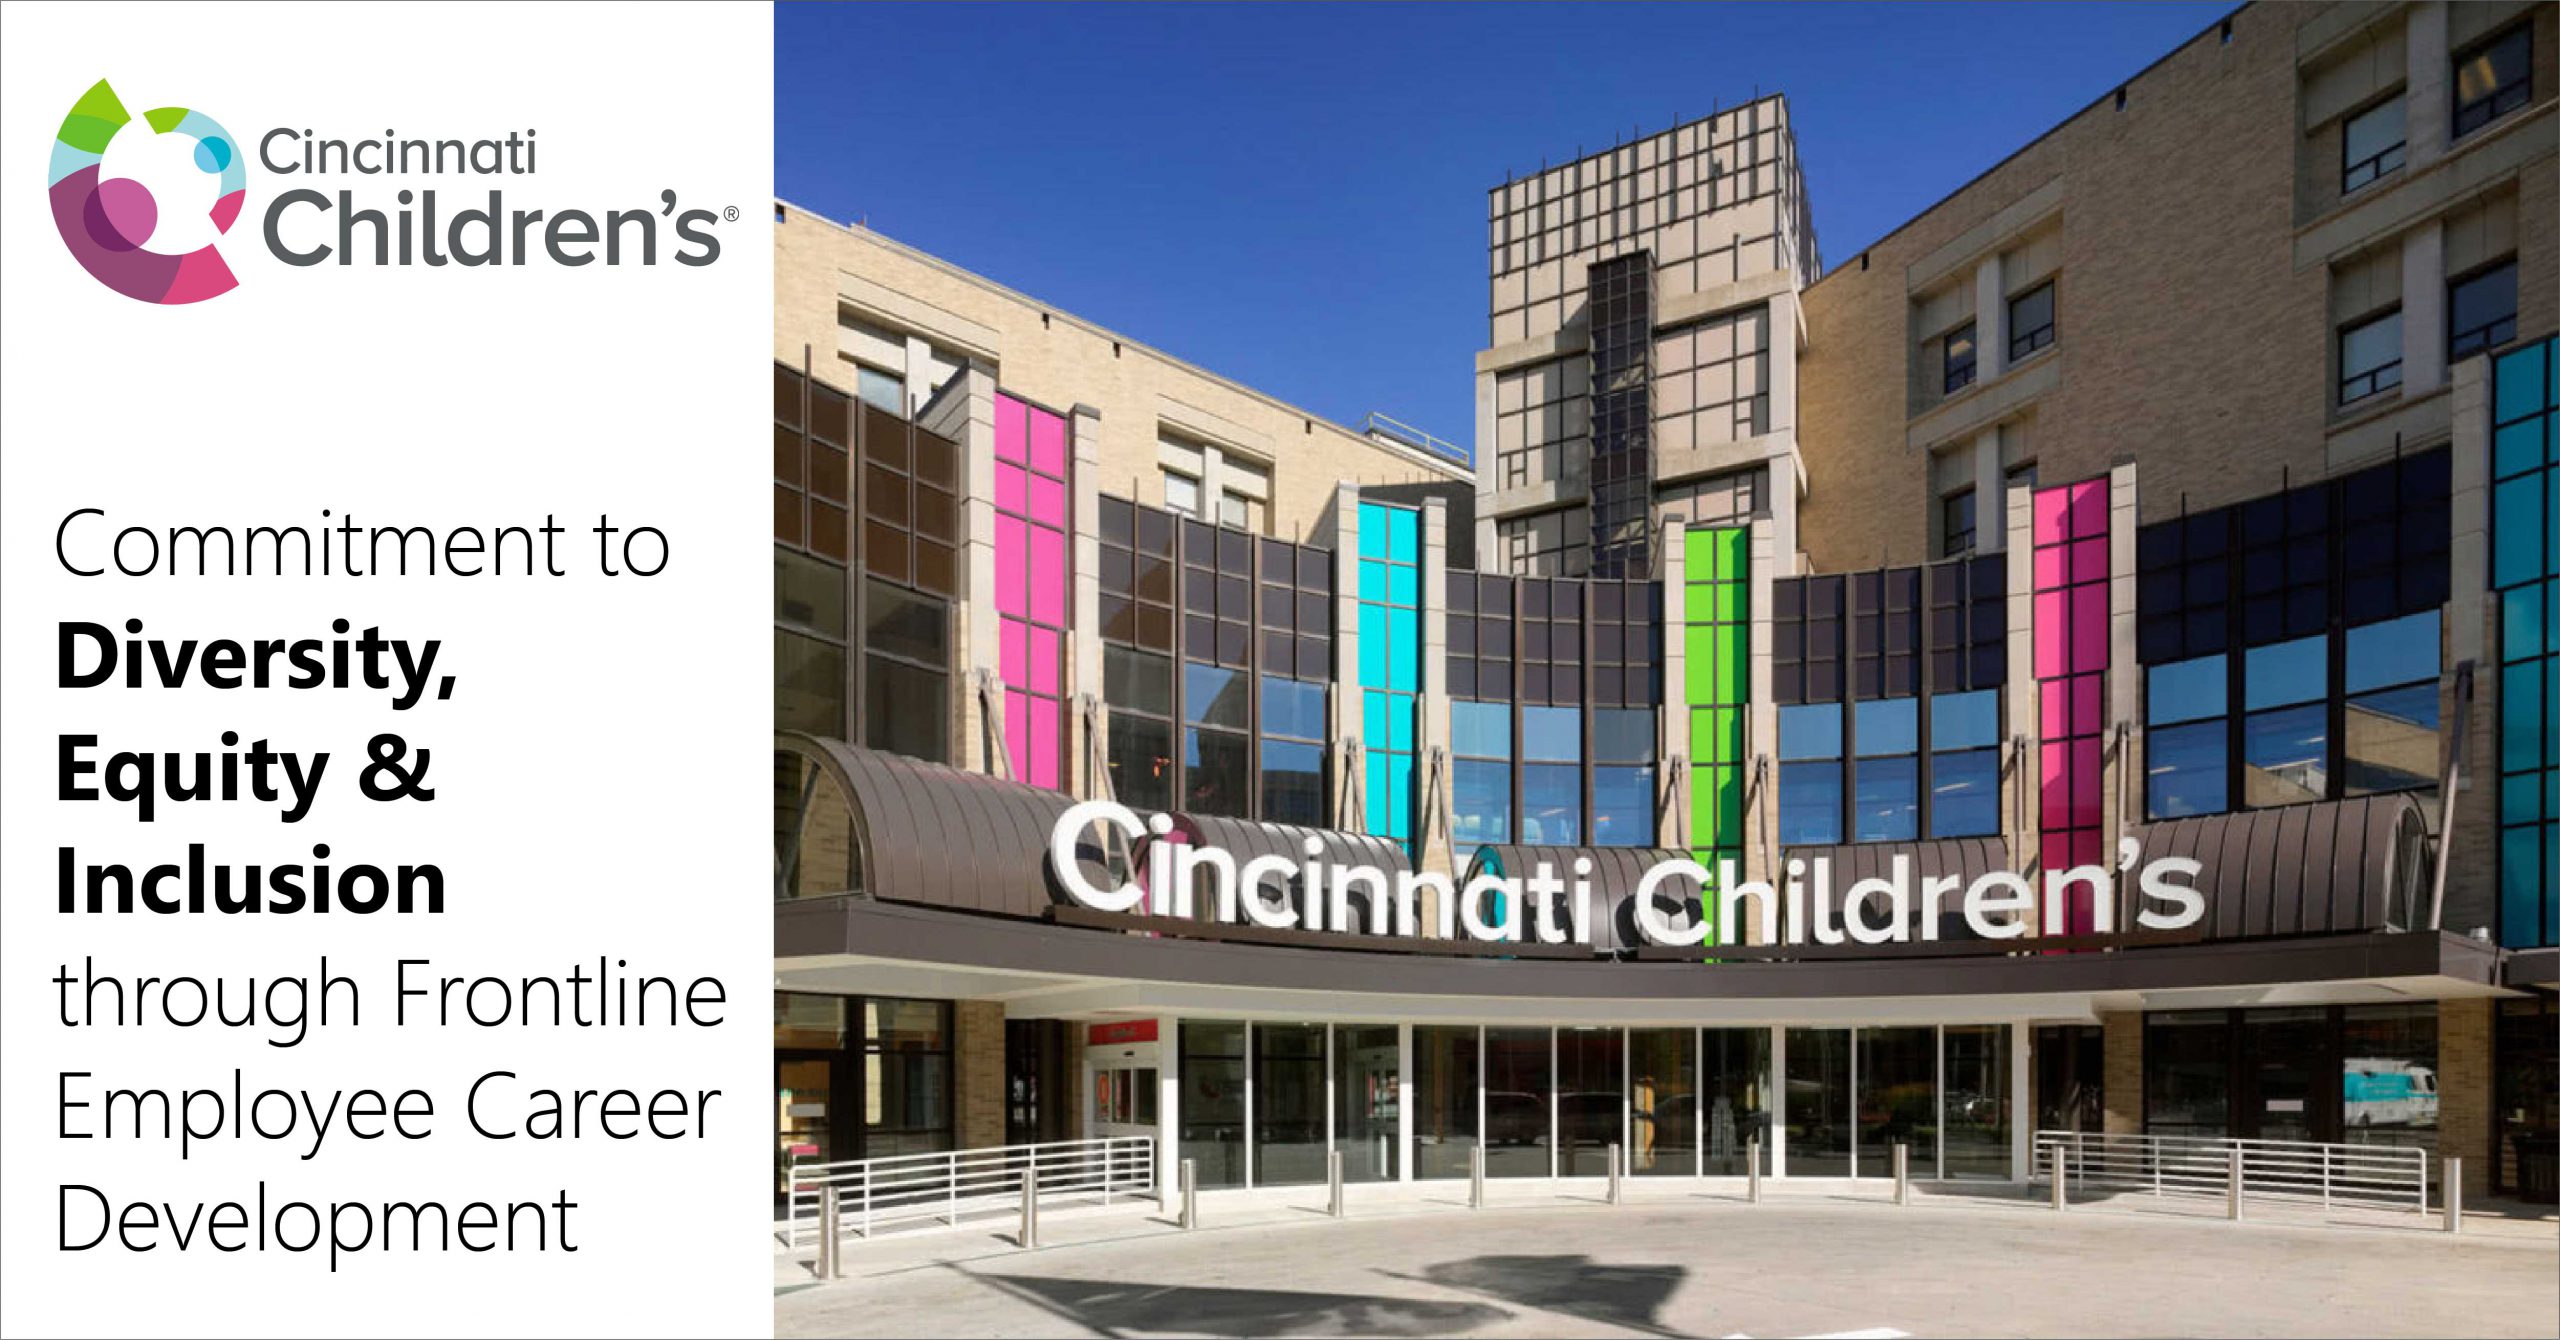 Cincinnati Children’s Commitment to Diversity & Inclusion through Frontline Employee Career Development